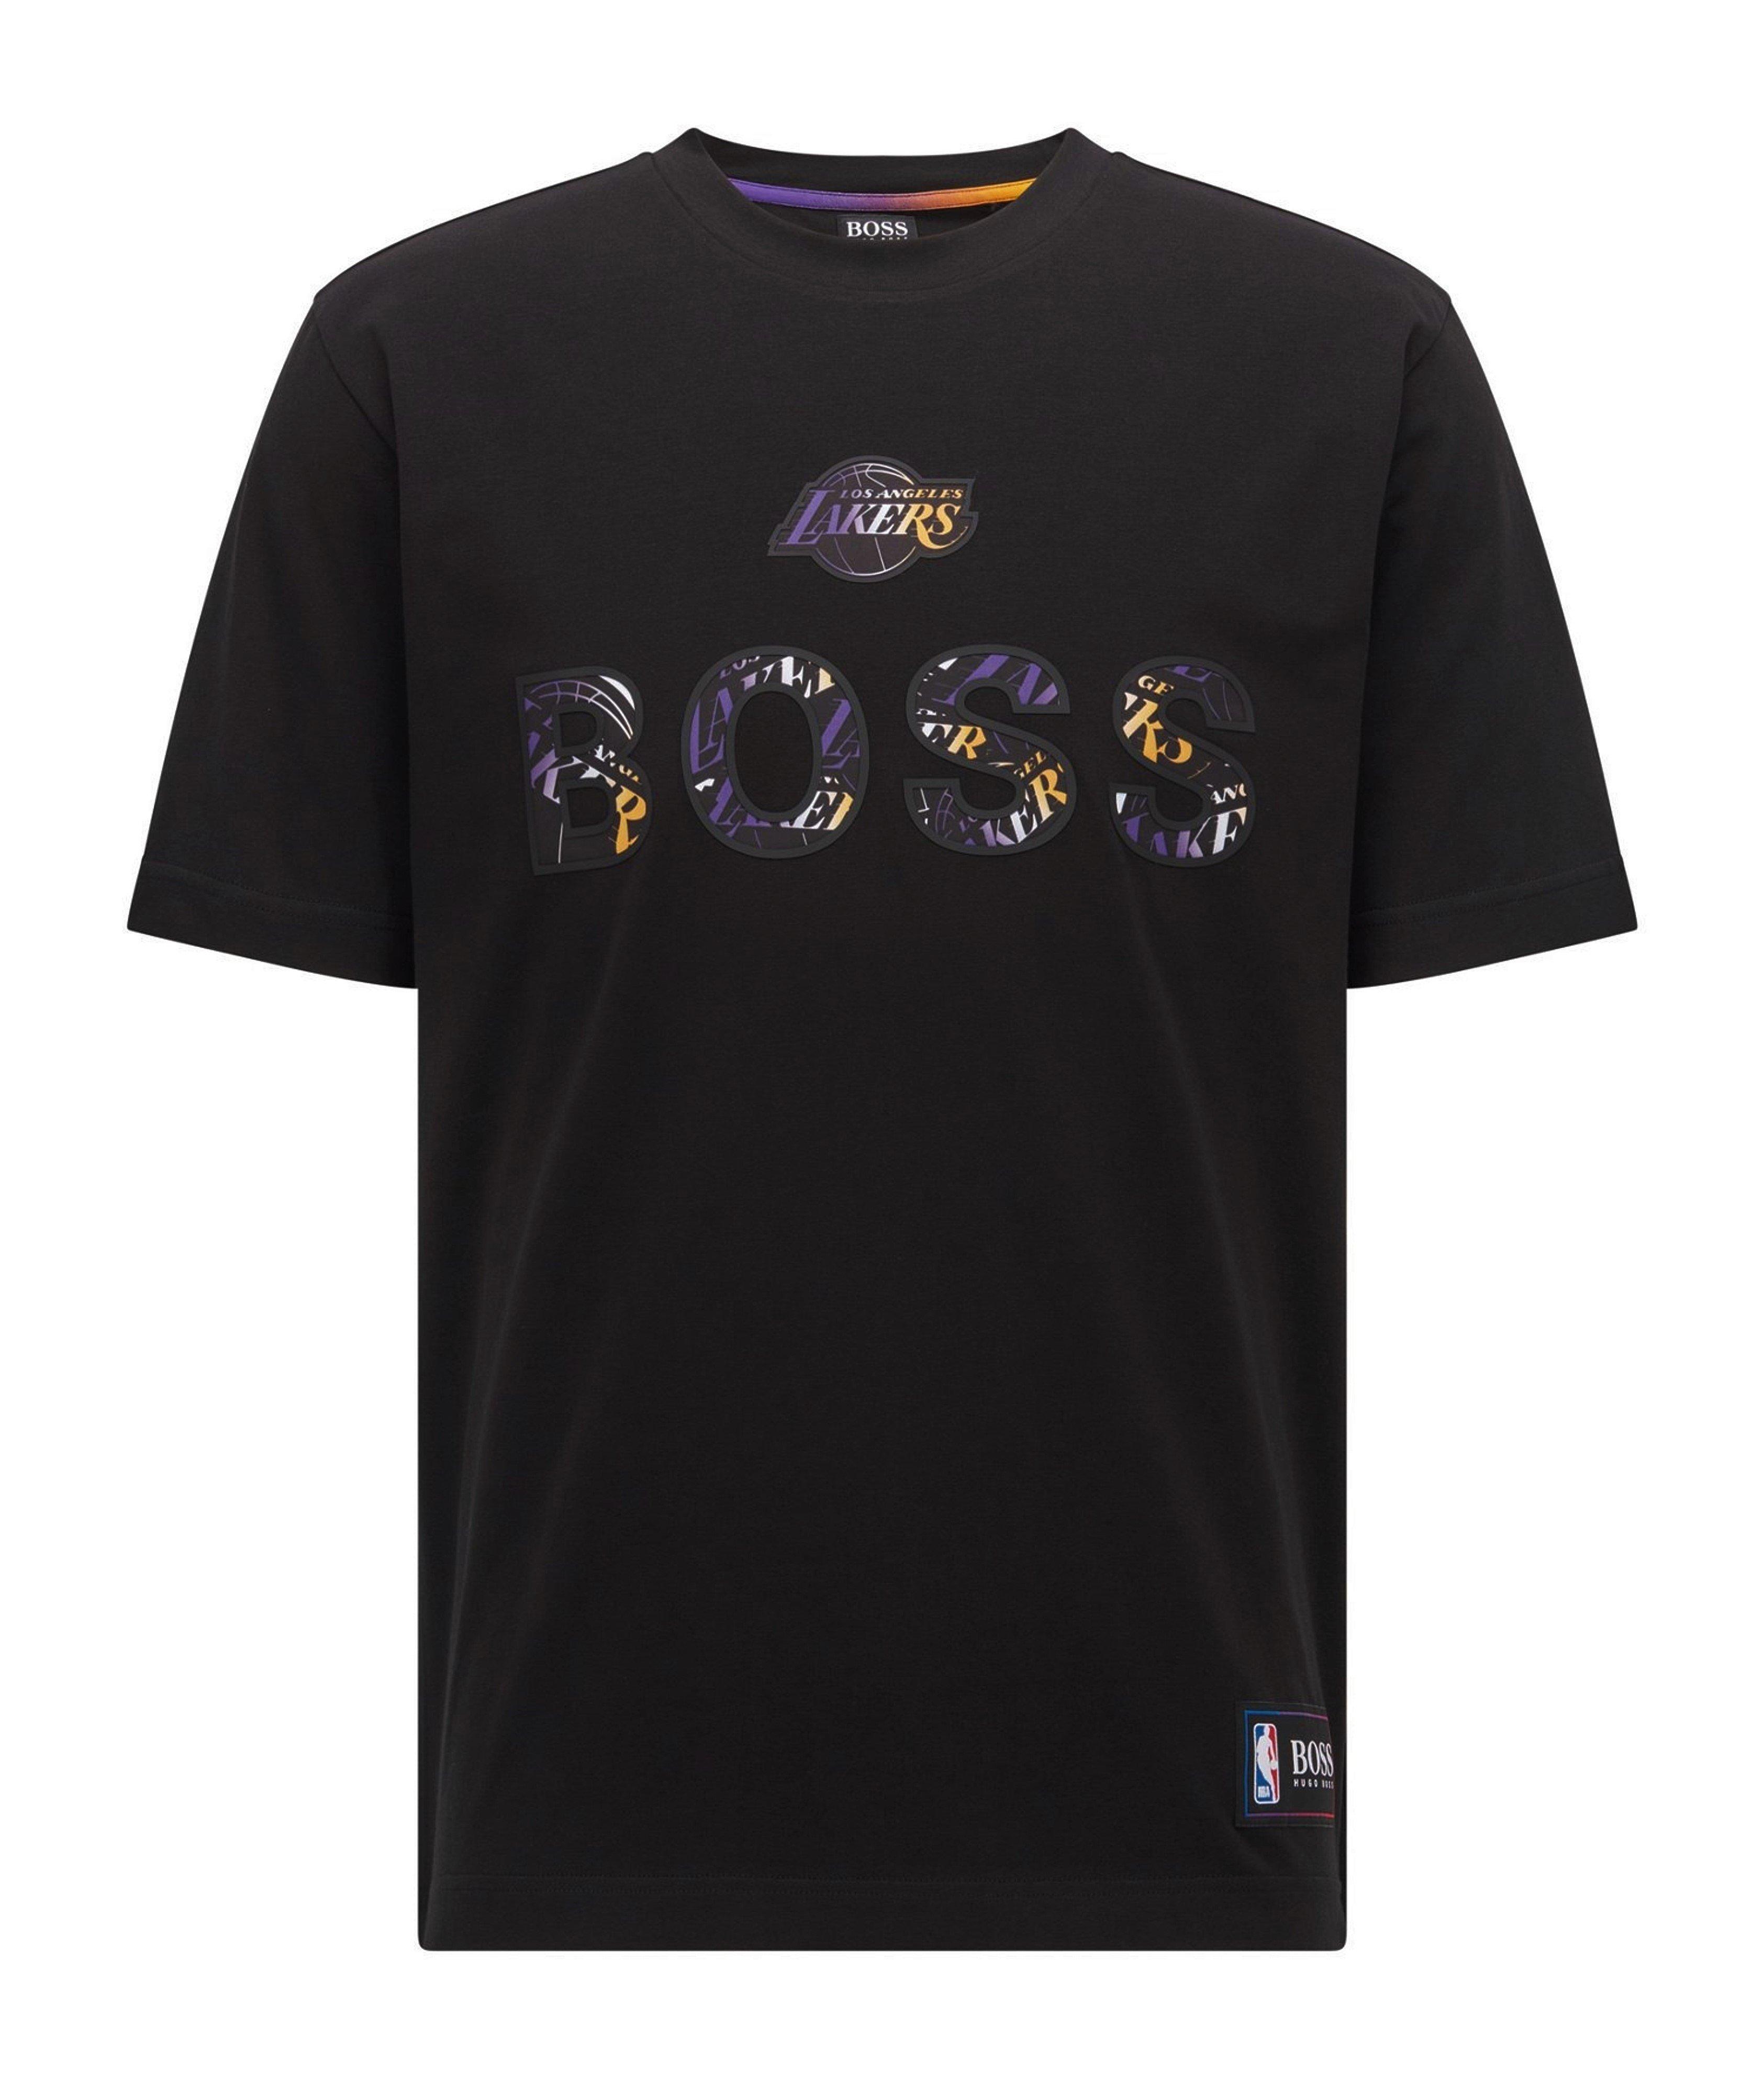 BOSS X NBA Stretch-Cotton T-Shirt image 0